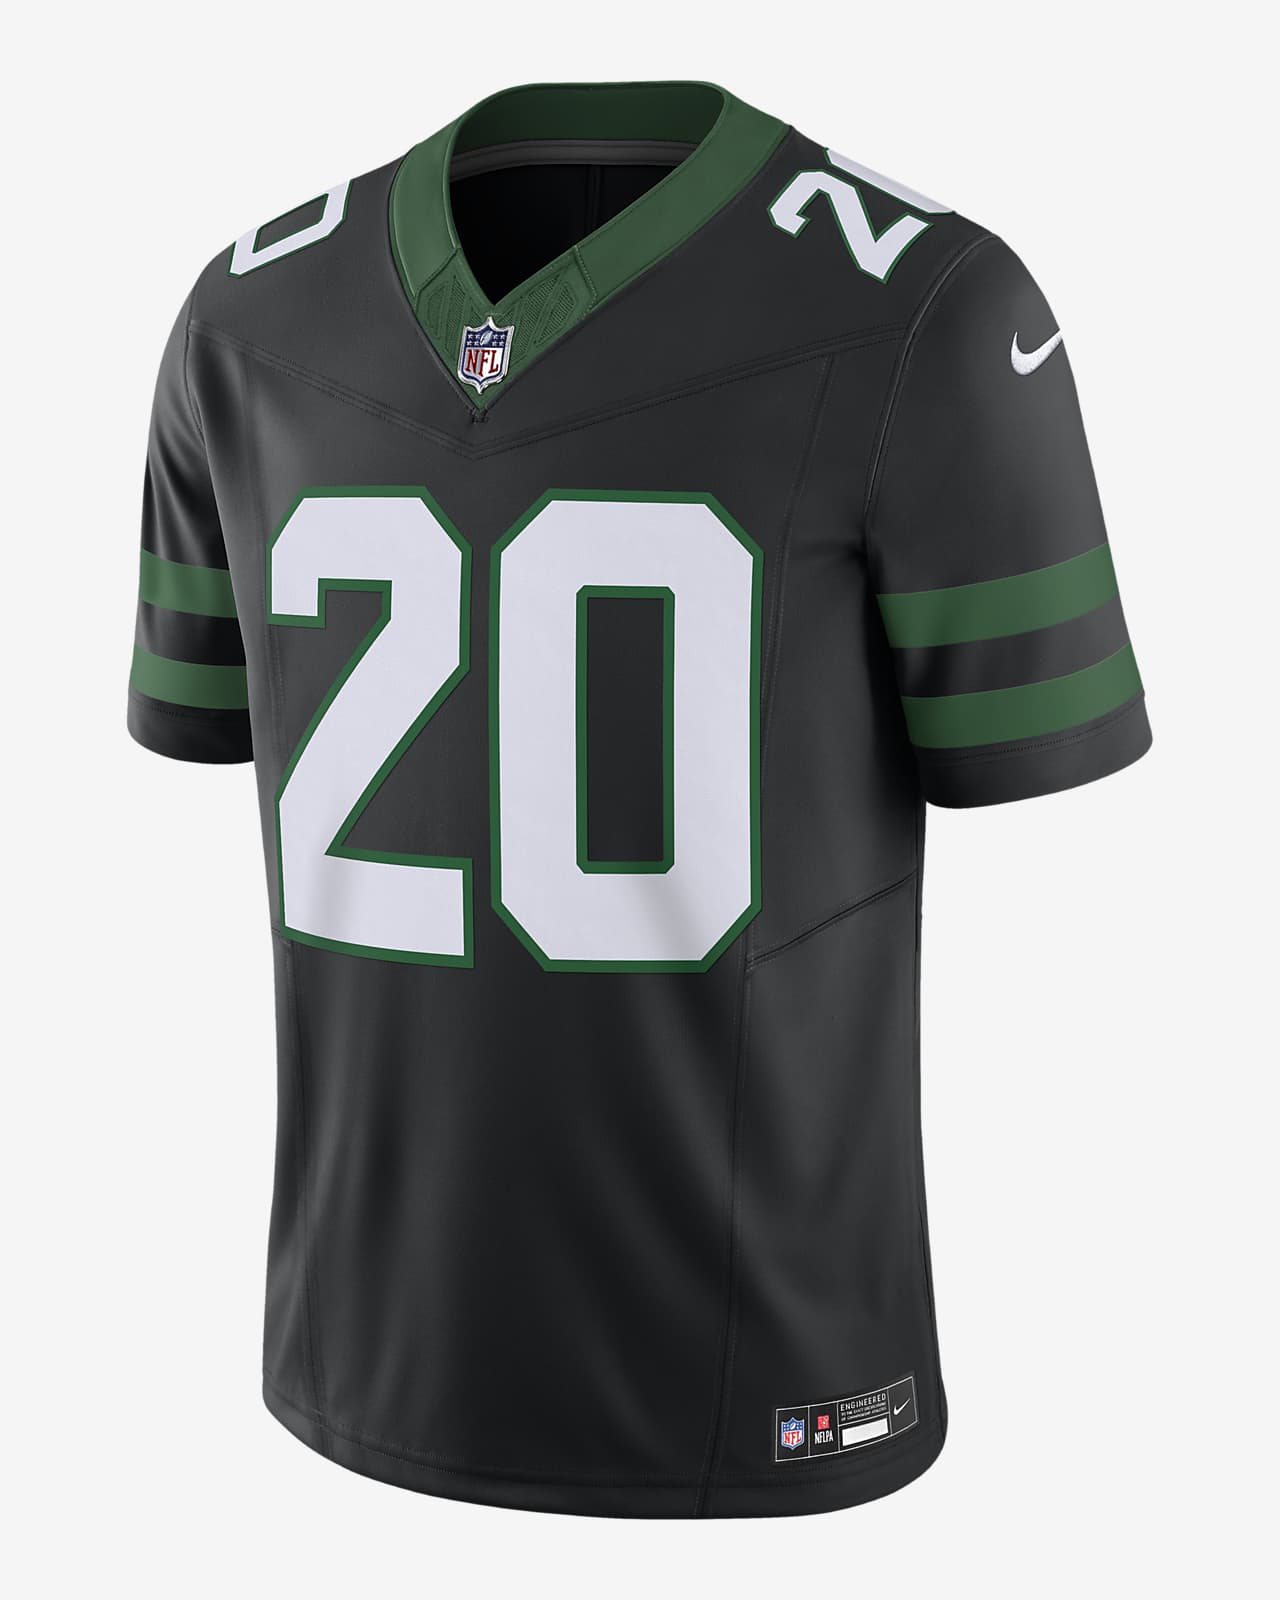 Jersey de fútbol americano Nike Dri-FIT de la NFL Limited para hombre Breece Hall New York Jets